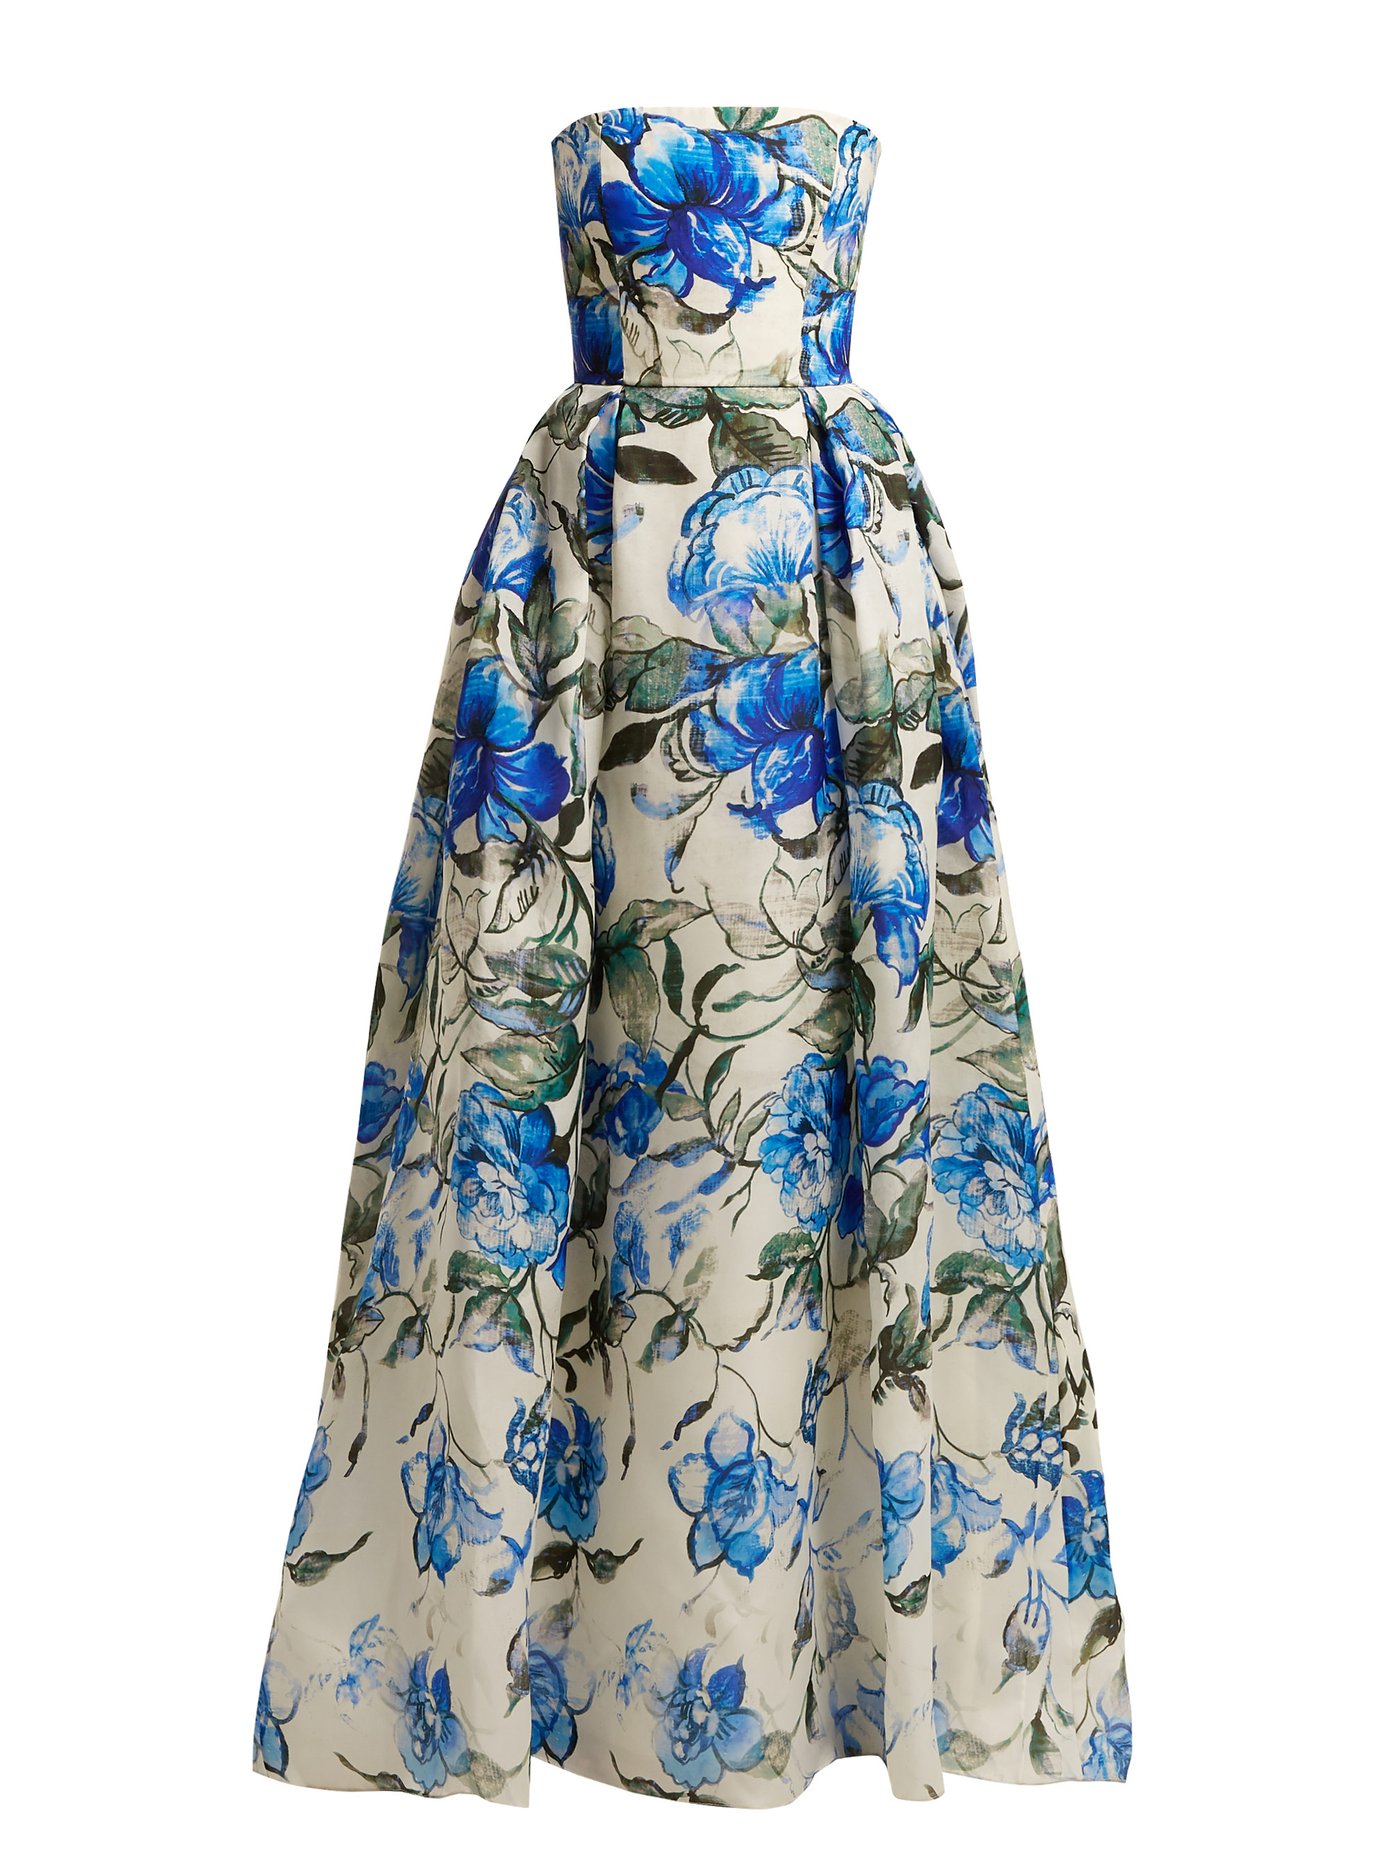 Carolina Herrera Blue Floral Dress Sale ...